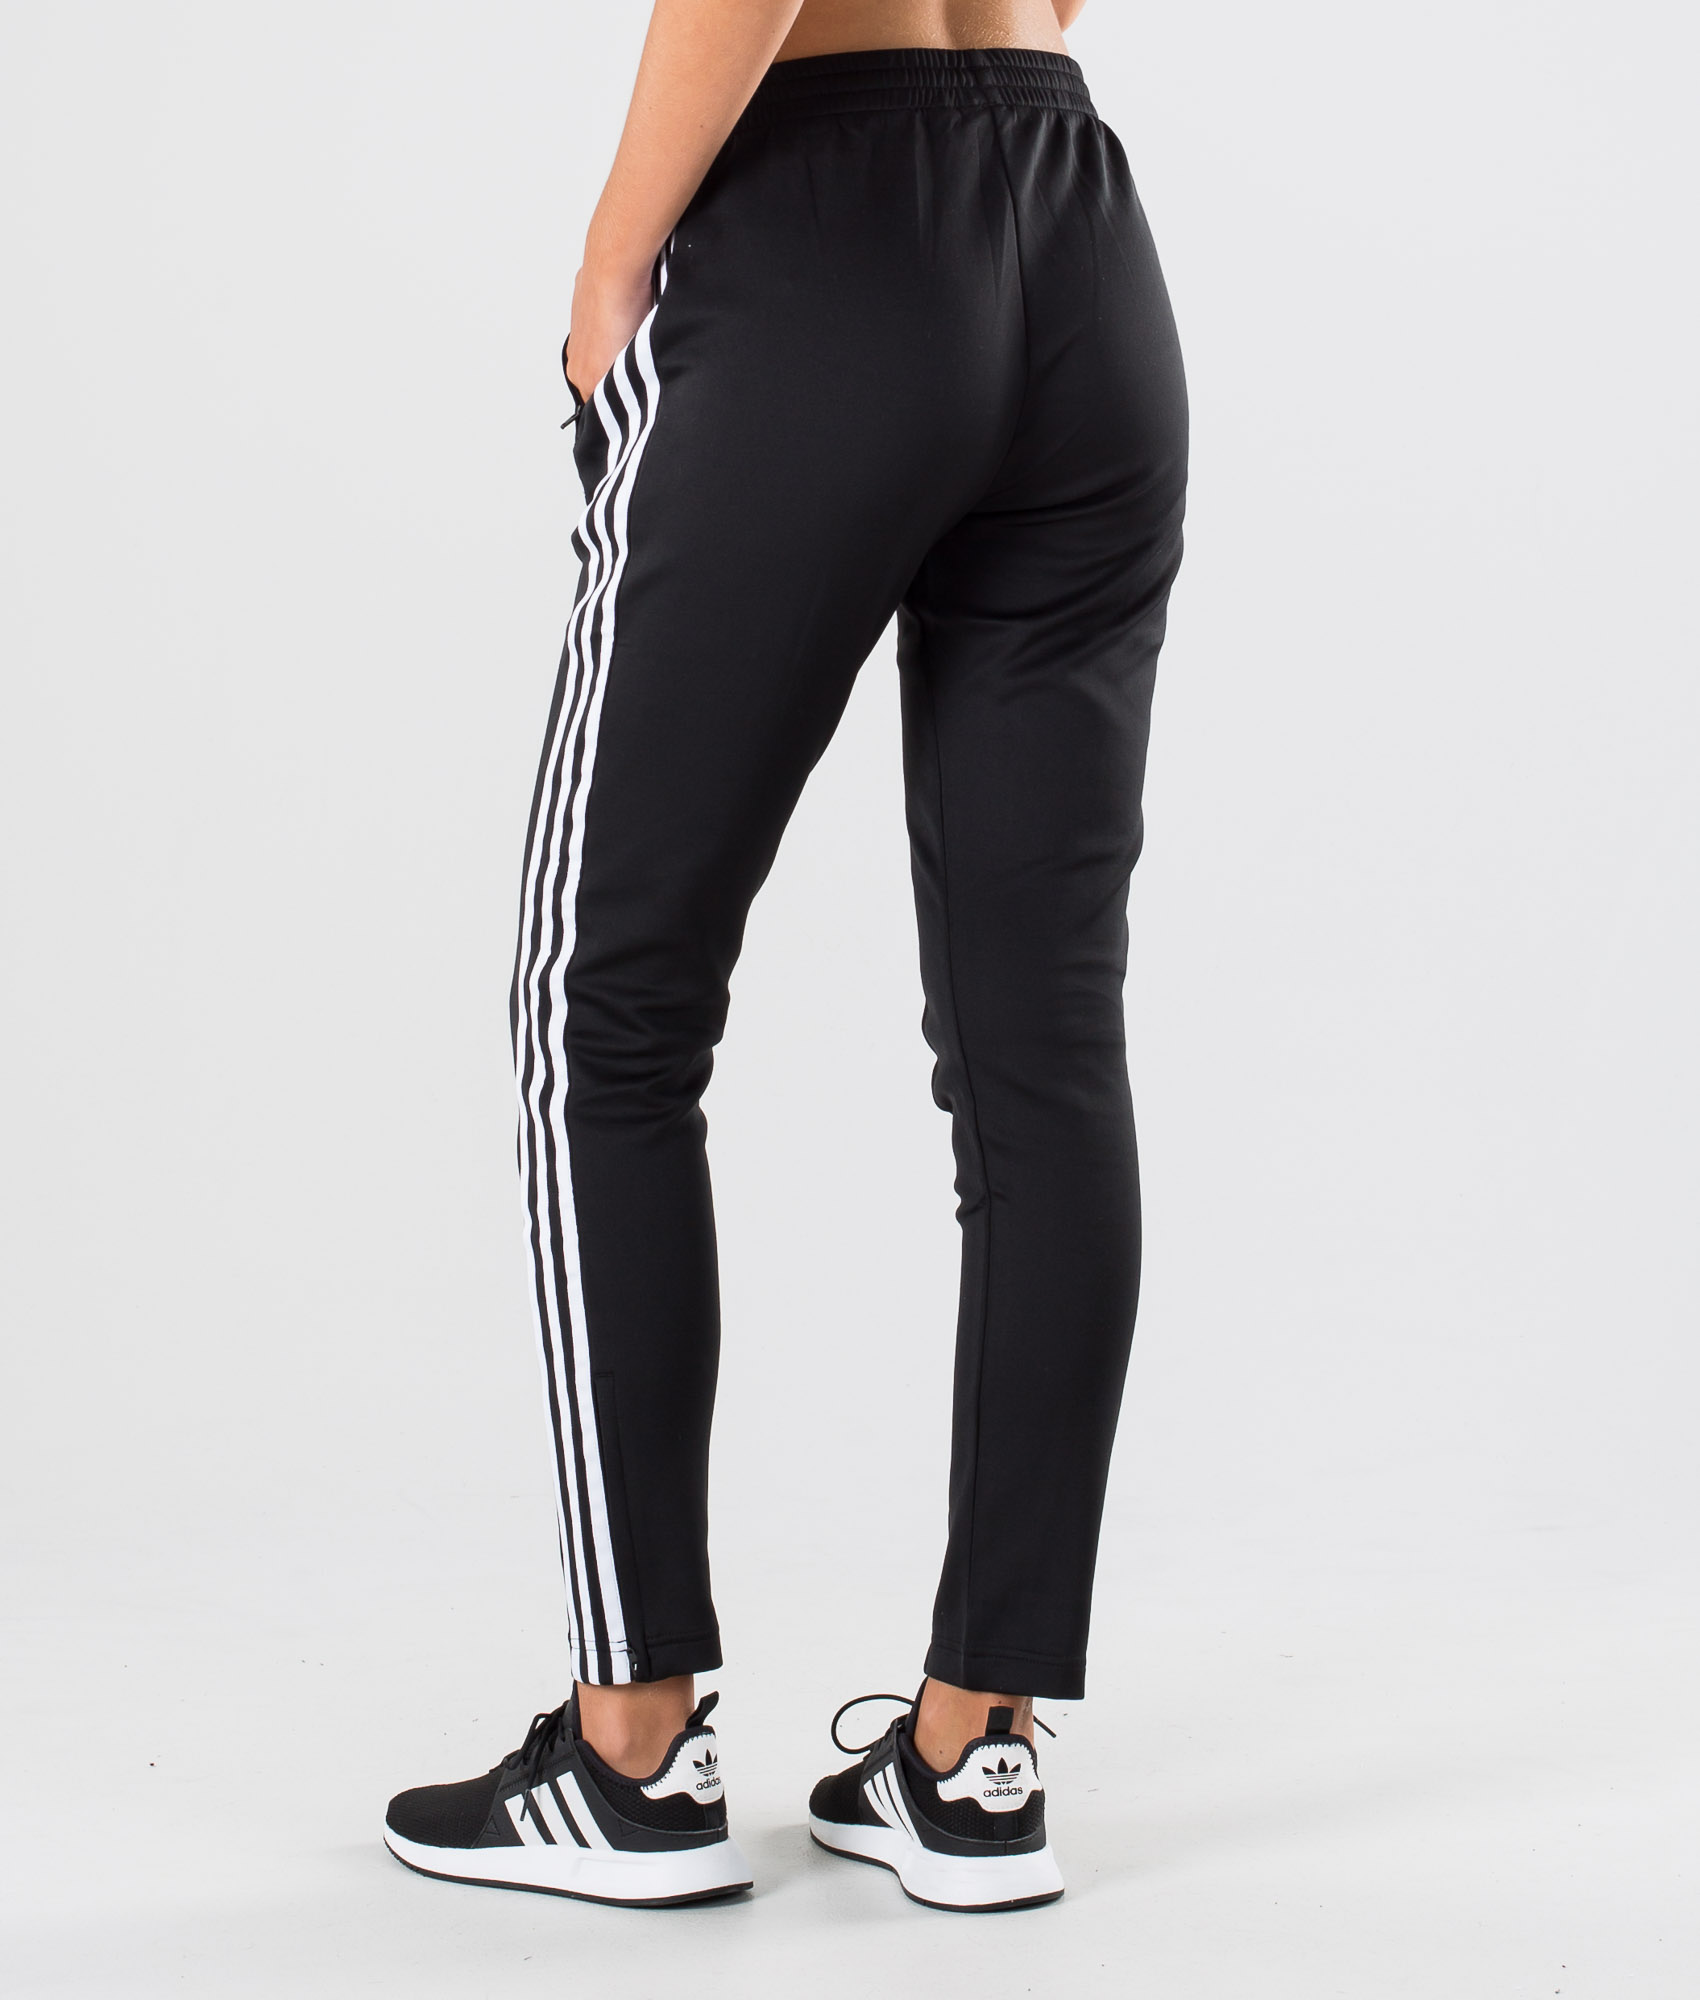 Adidas Originals Ss Track Pants Pants 